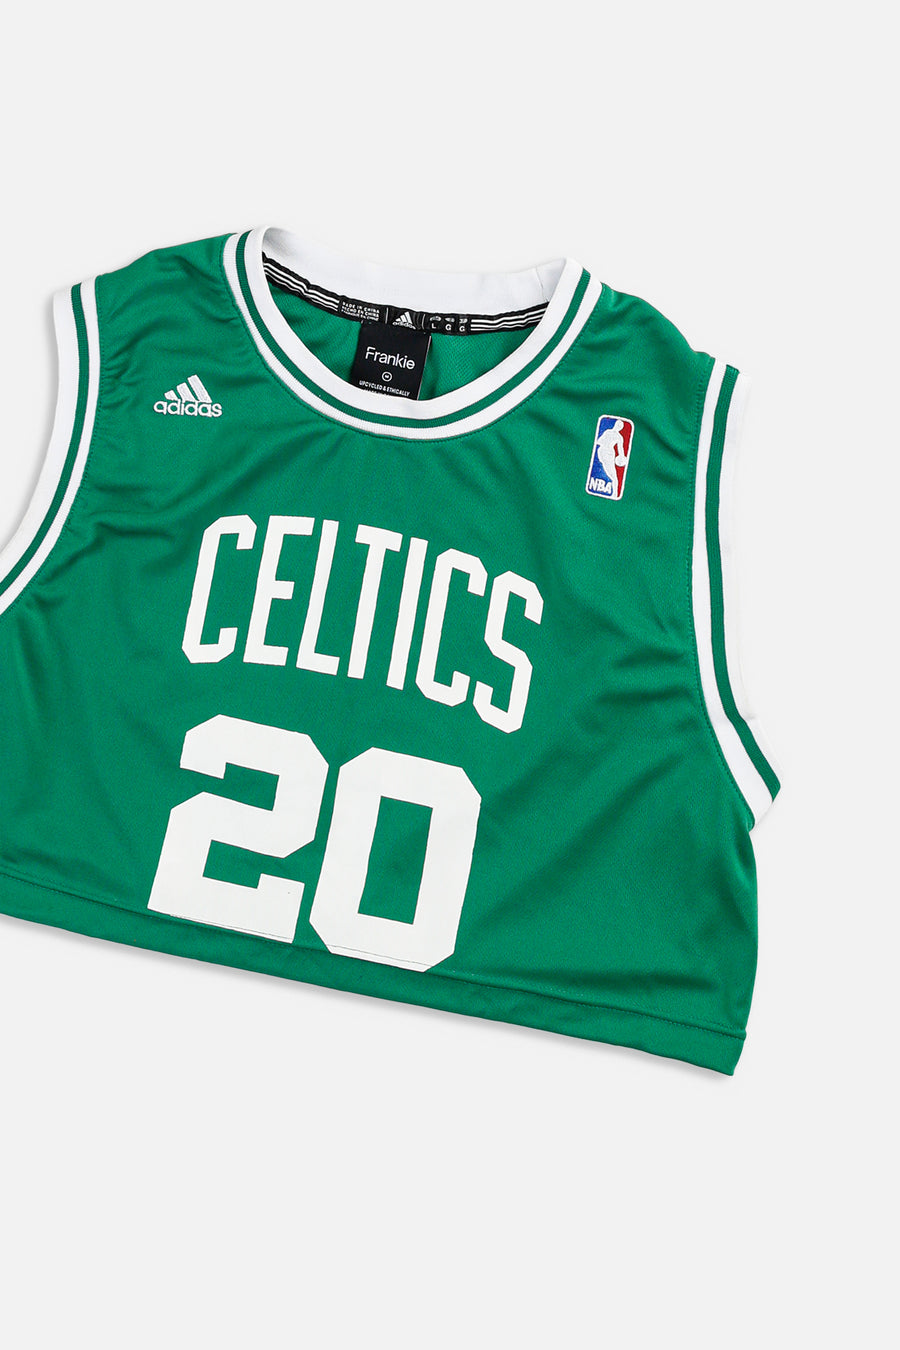 Rework Boston Celtics NBA Crop Jersey - M